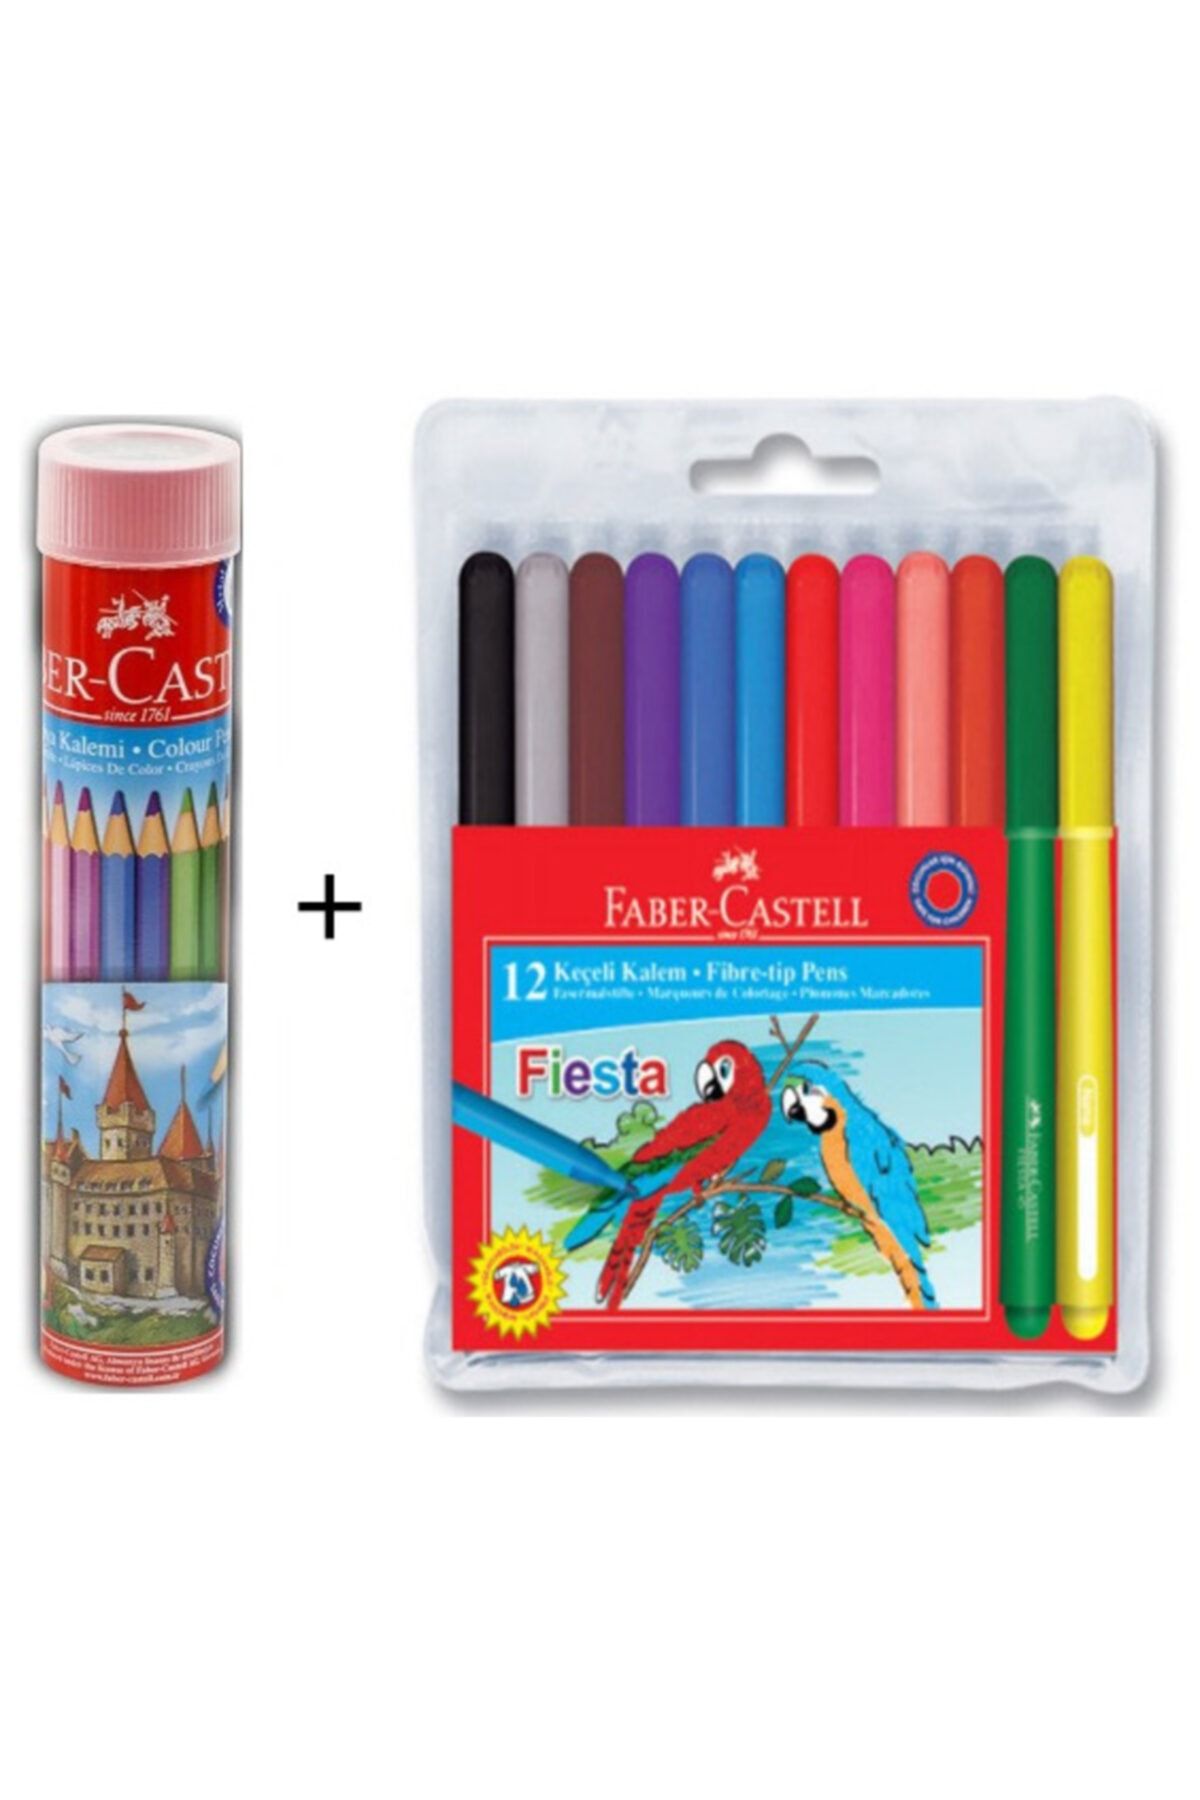 Faber Castell 12 Li Tüp Kuru Boya + Fiesta 12 Renk Keçeli Kalem